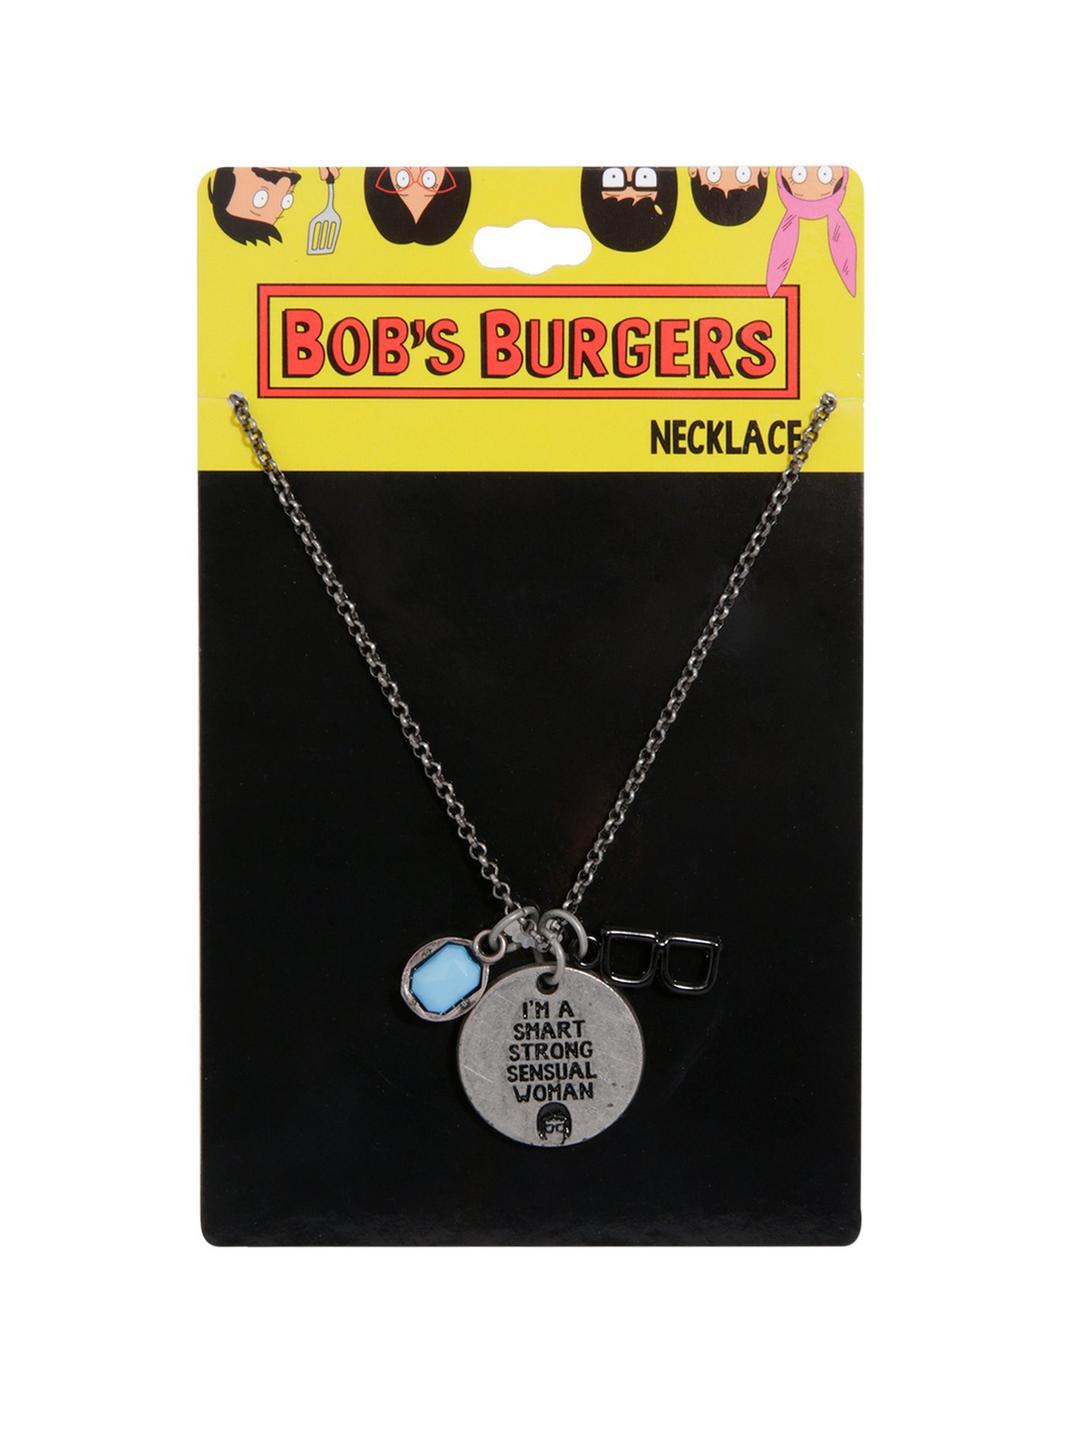 Bob's Burgers Tina Smart Strong Sensual Woman Necklace, , hi-res